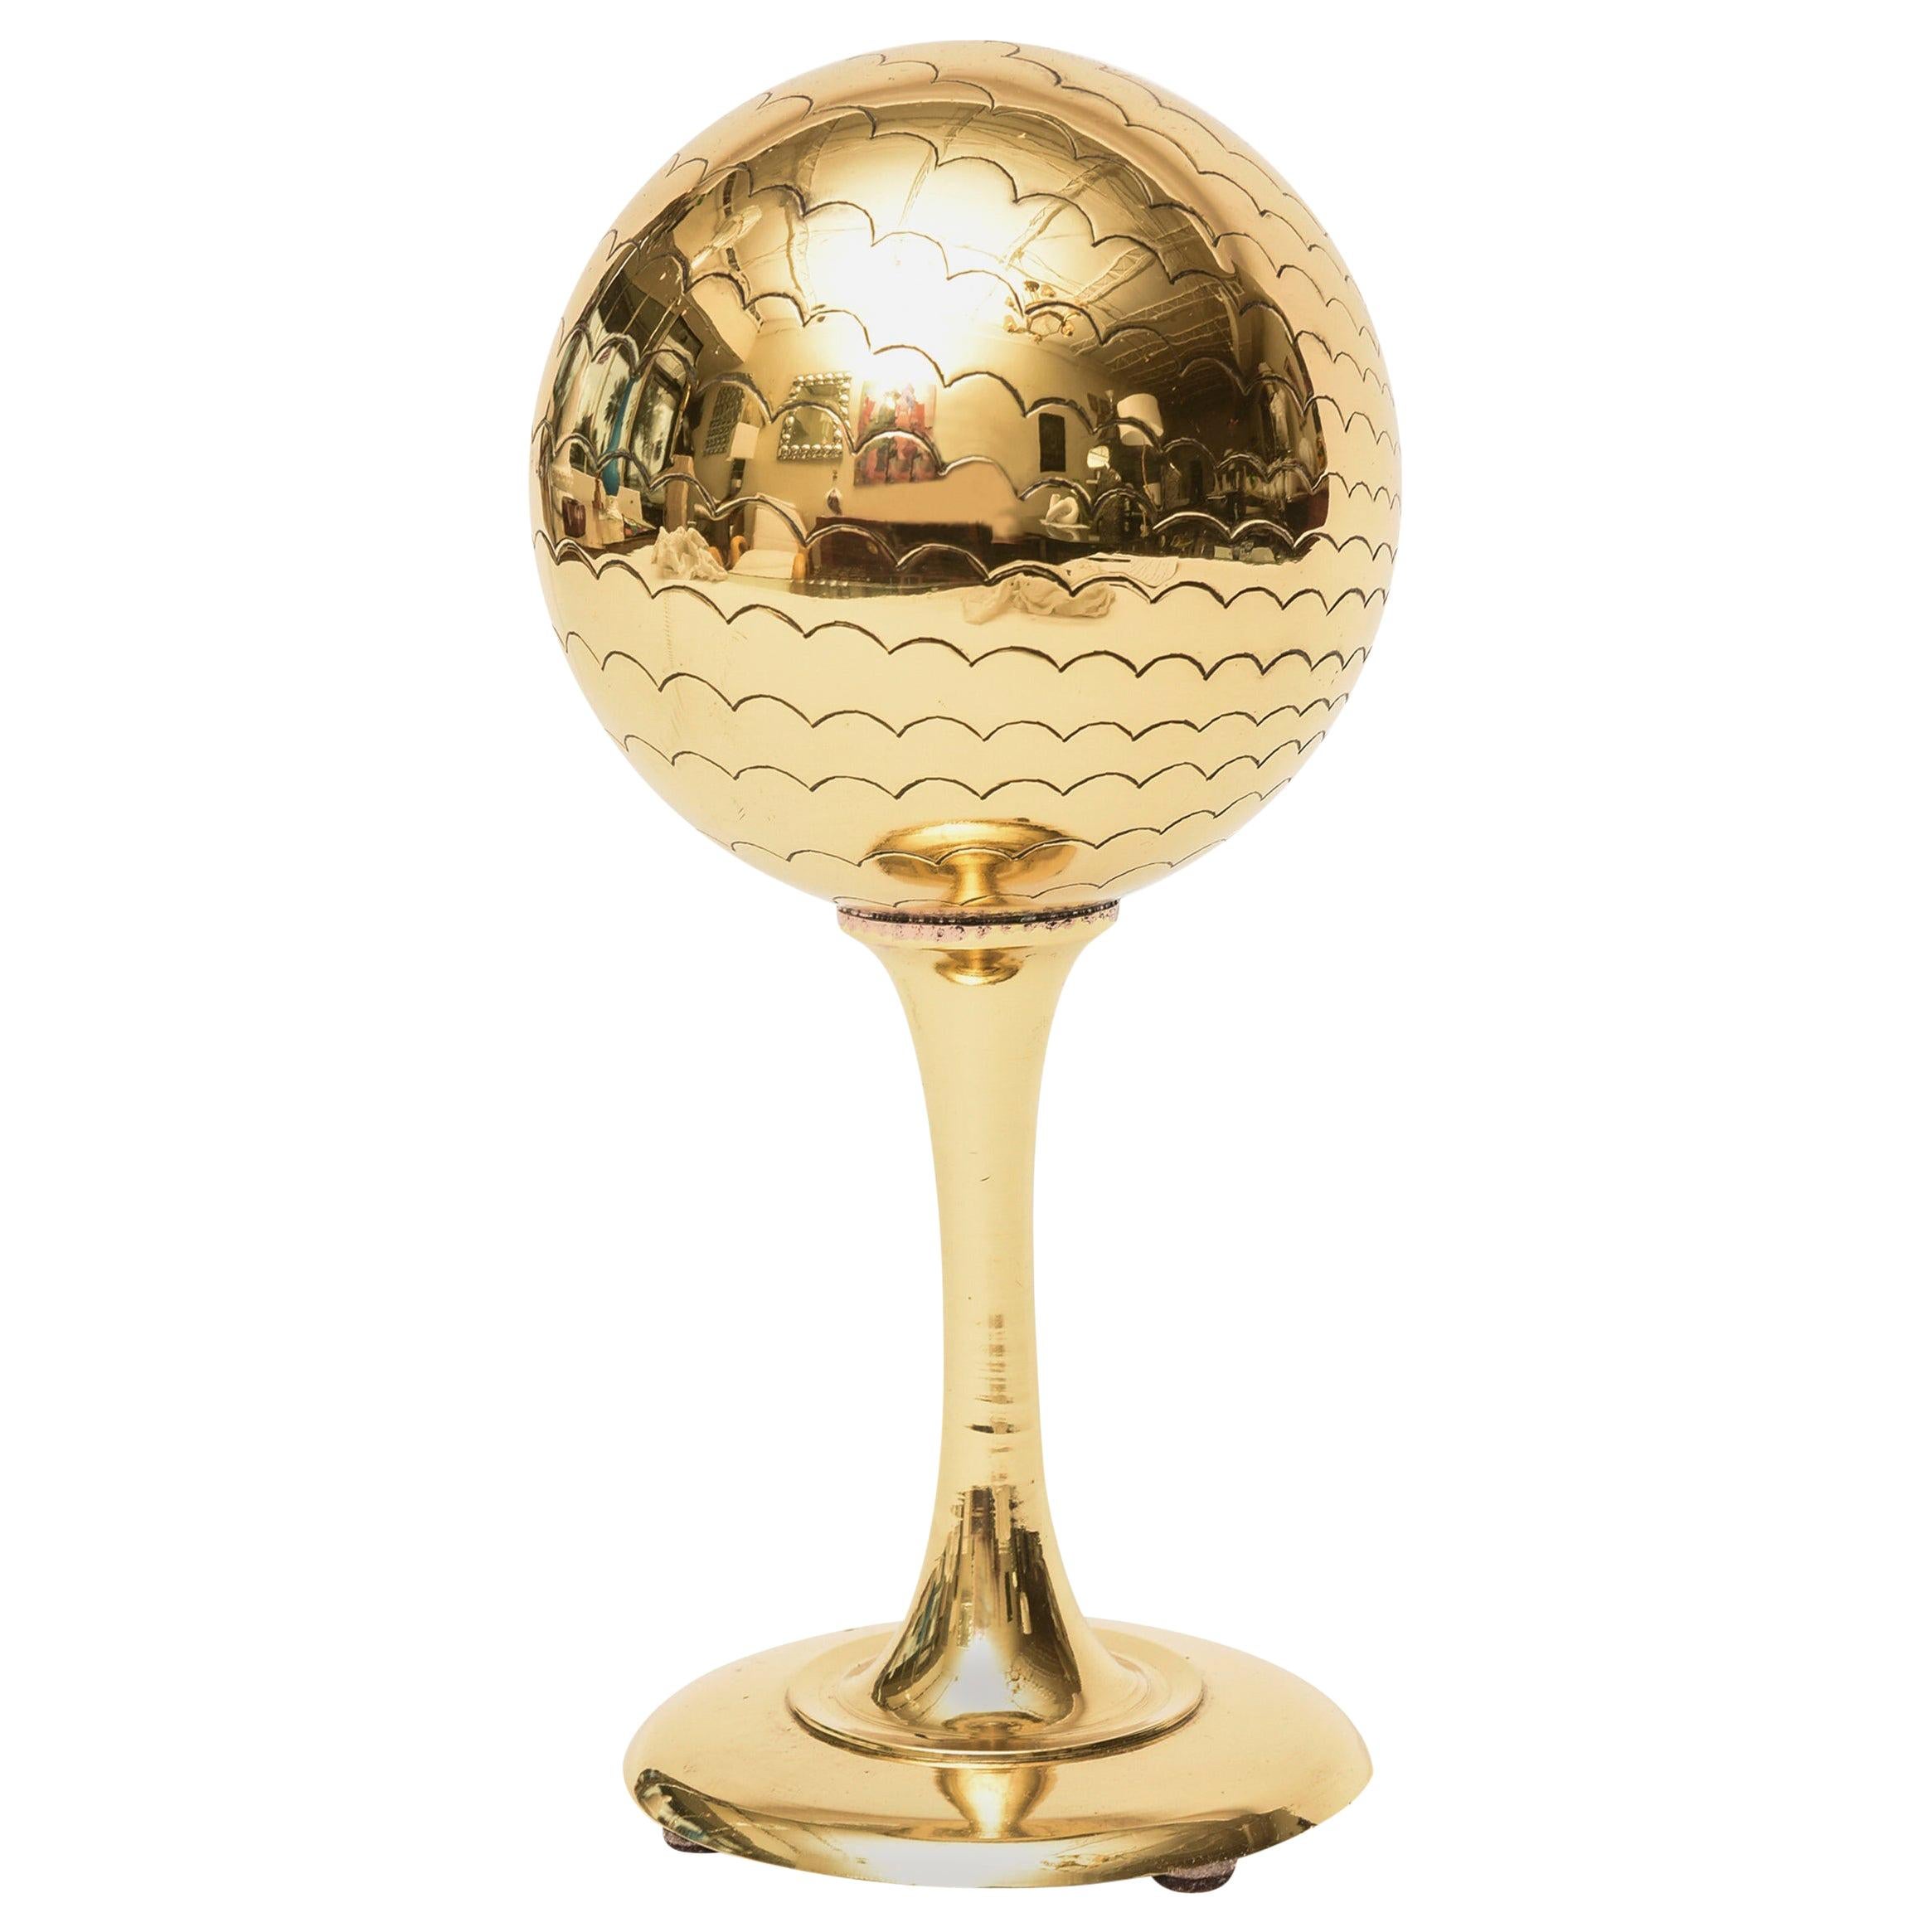 Brass Globe Sculpture or Object Mid-Century Modern Desk Accessory